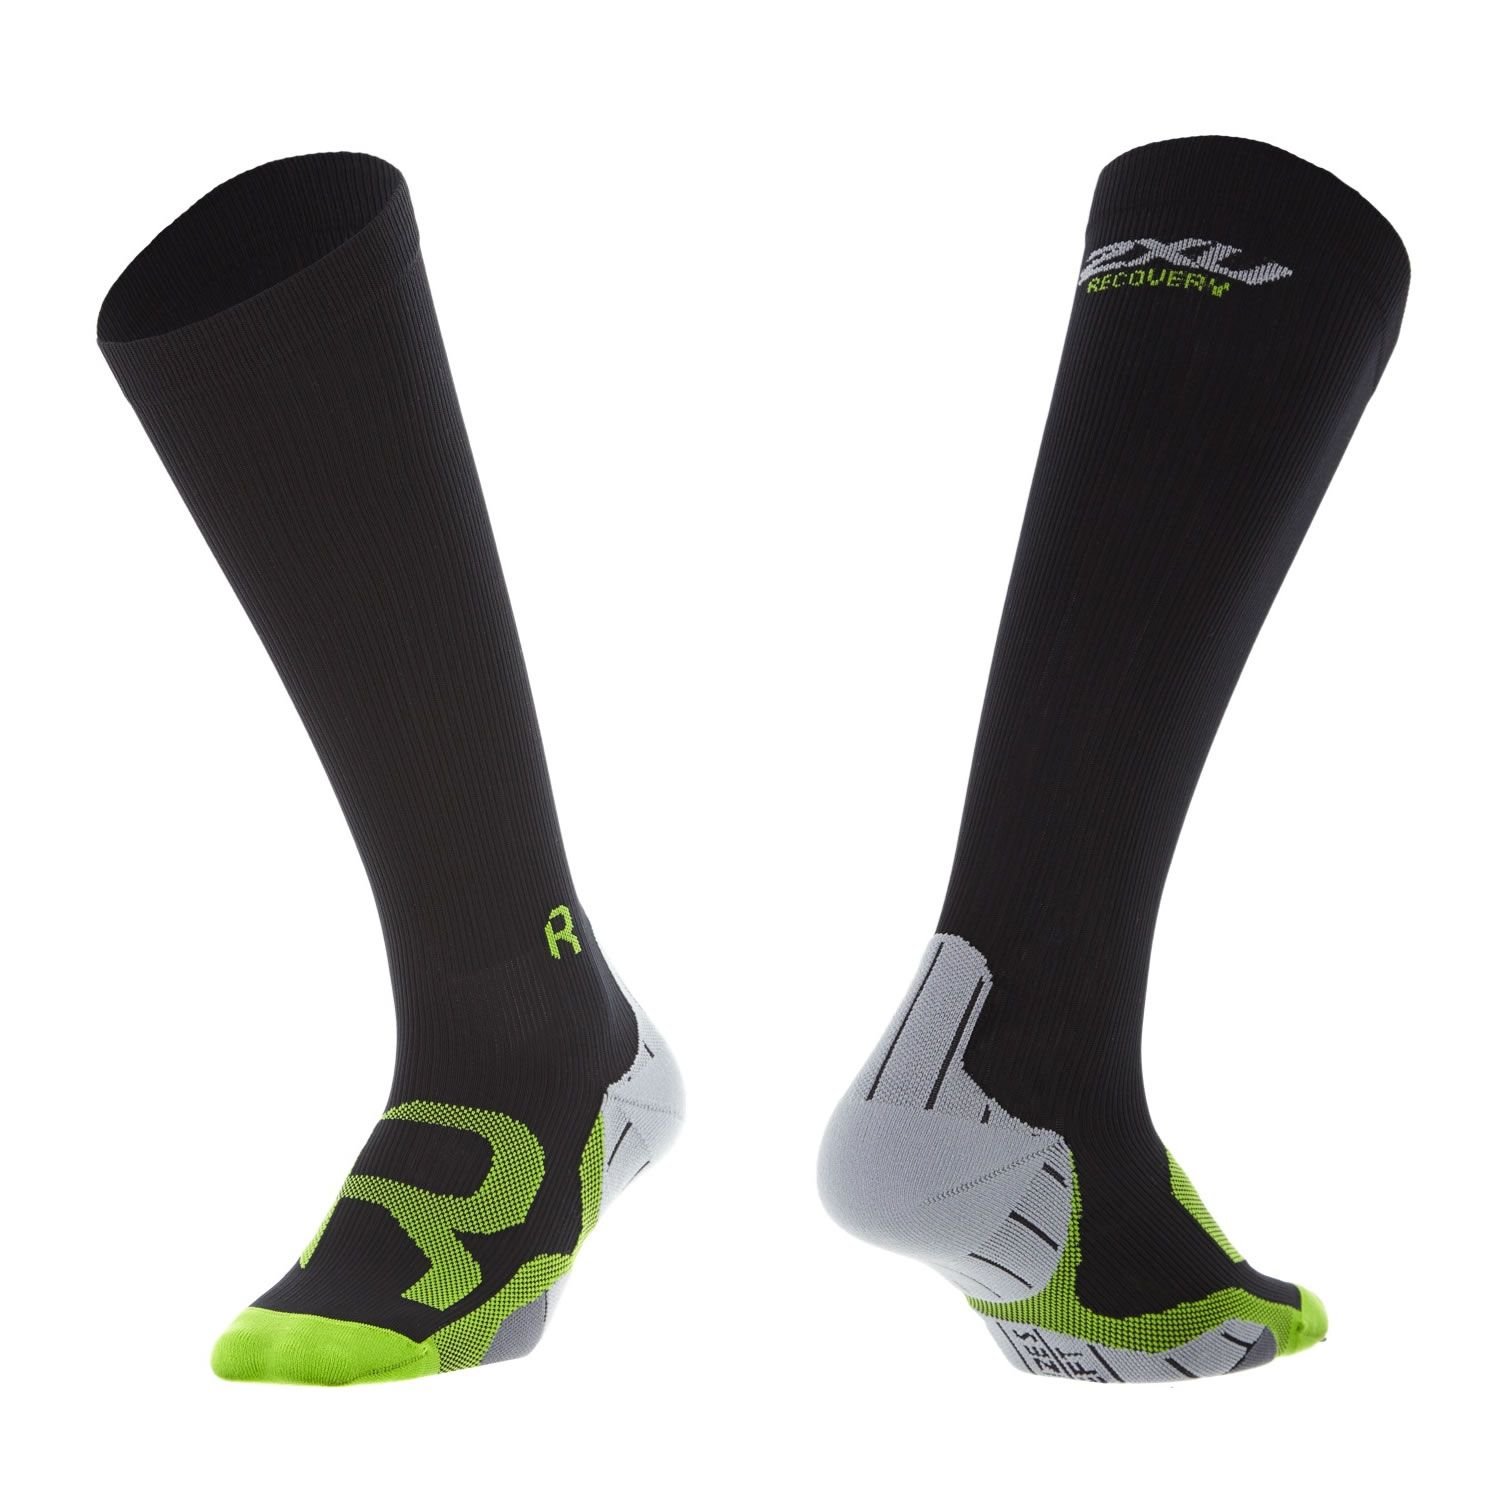 https://www.sefiles.net/merchant/1194/images/zoom/wa4424-compression-socks-for-recovery-women-2xu-blkgry.jpg